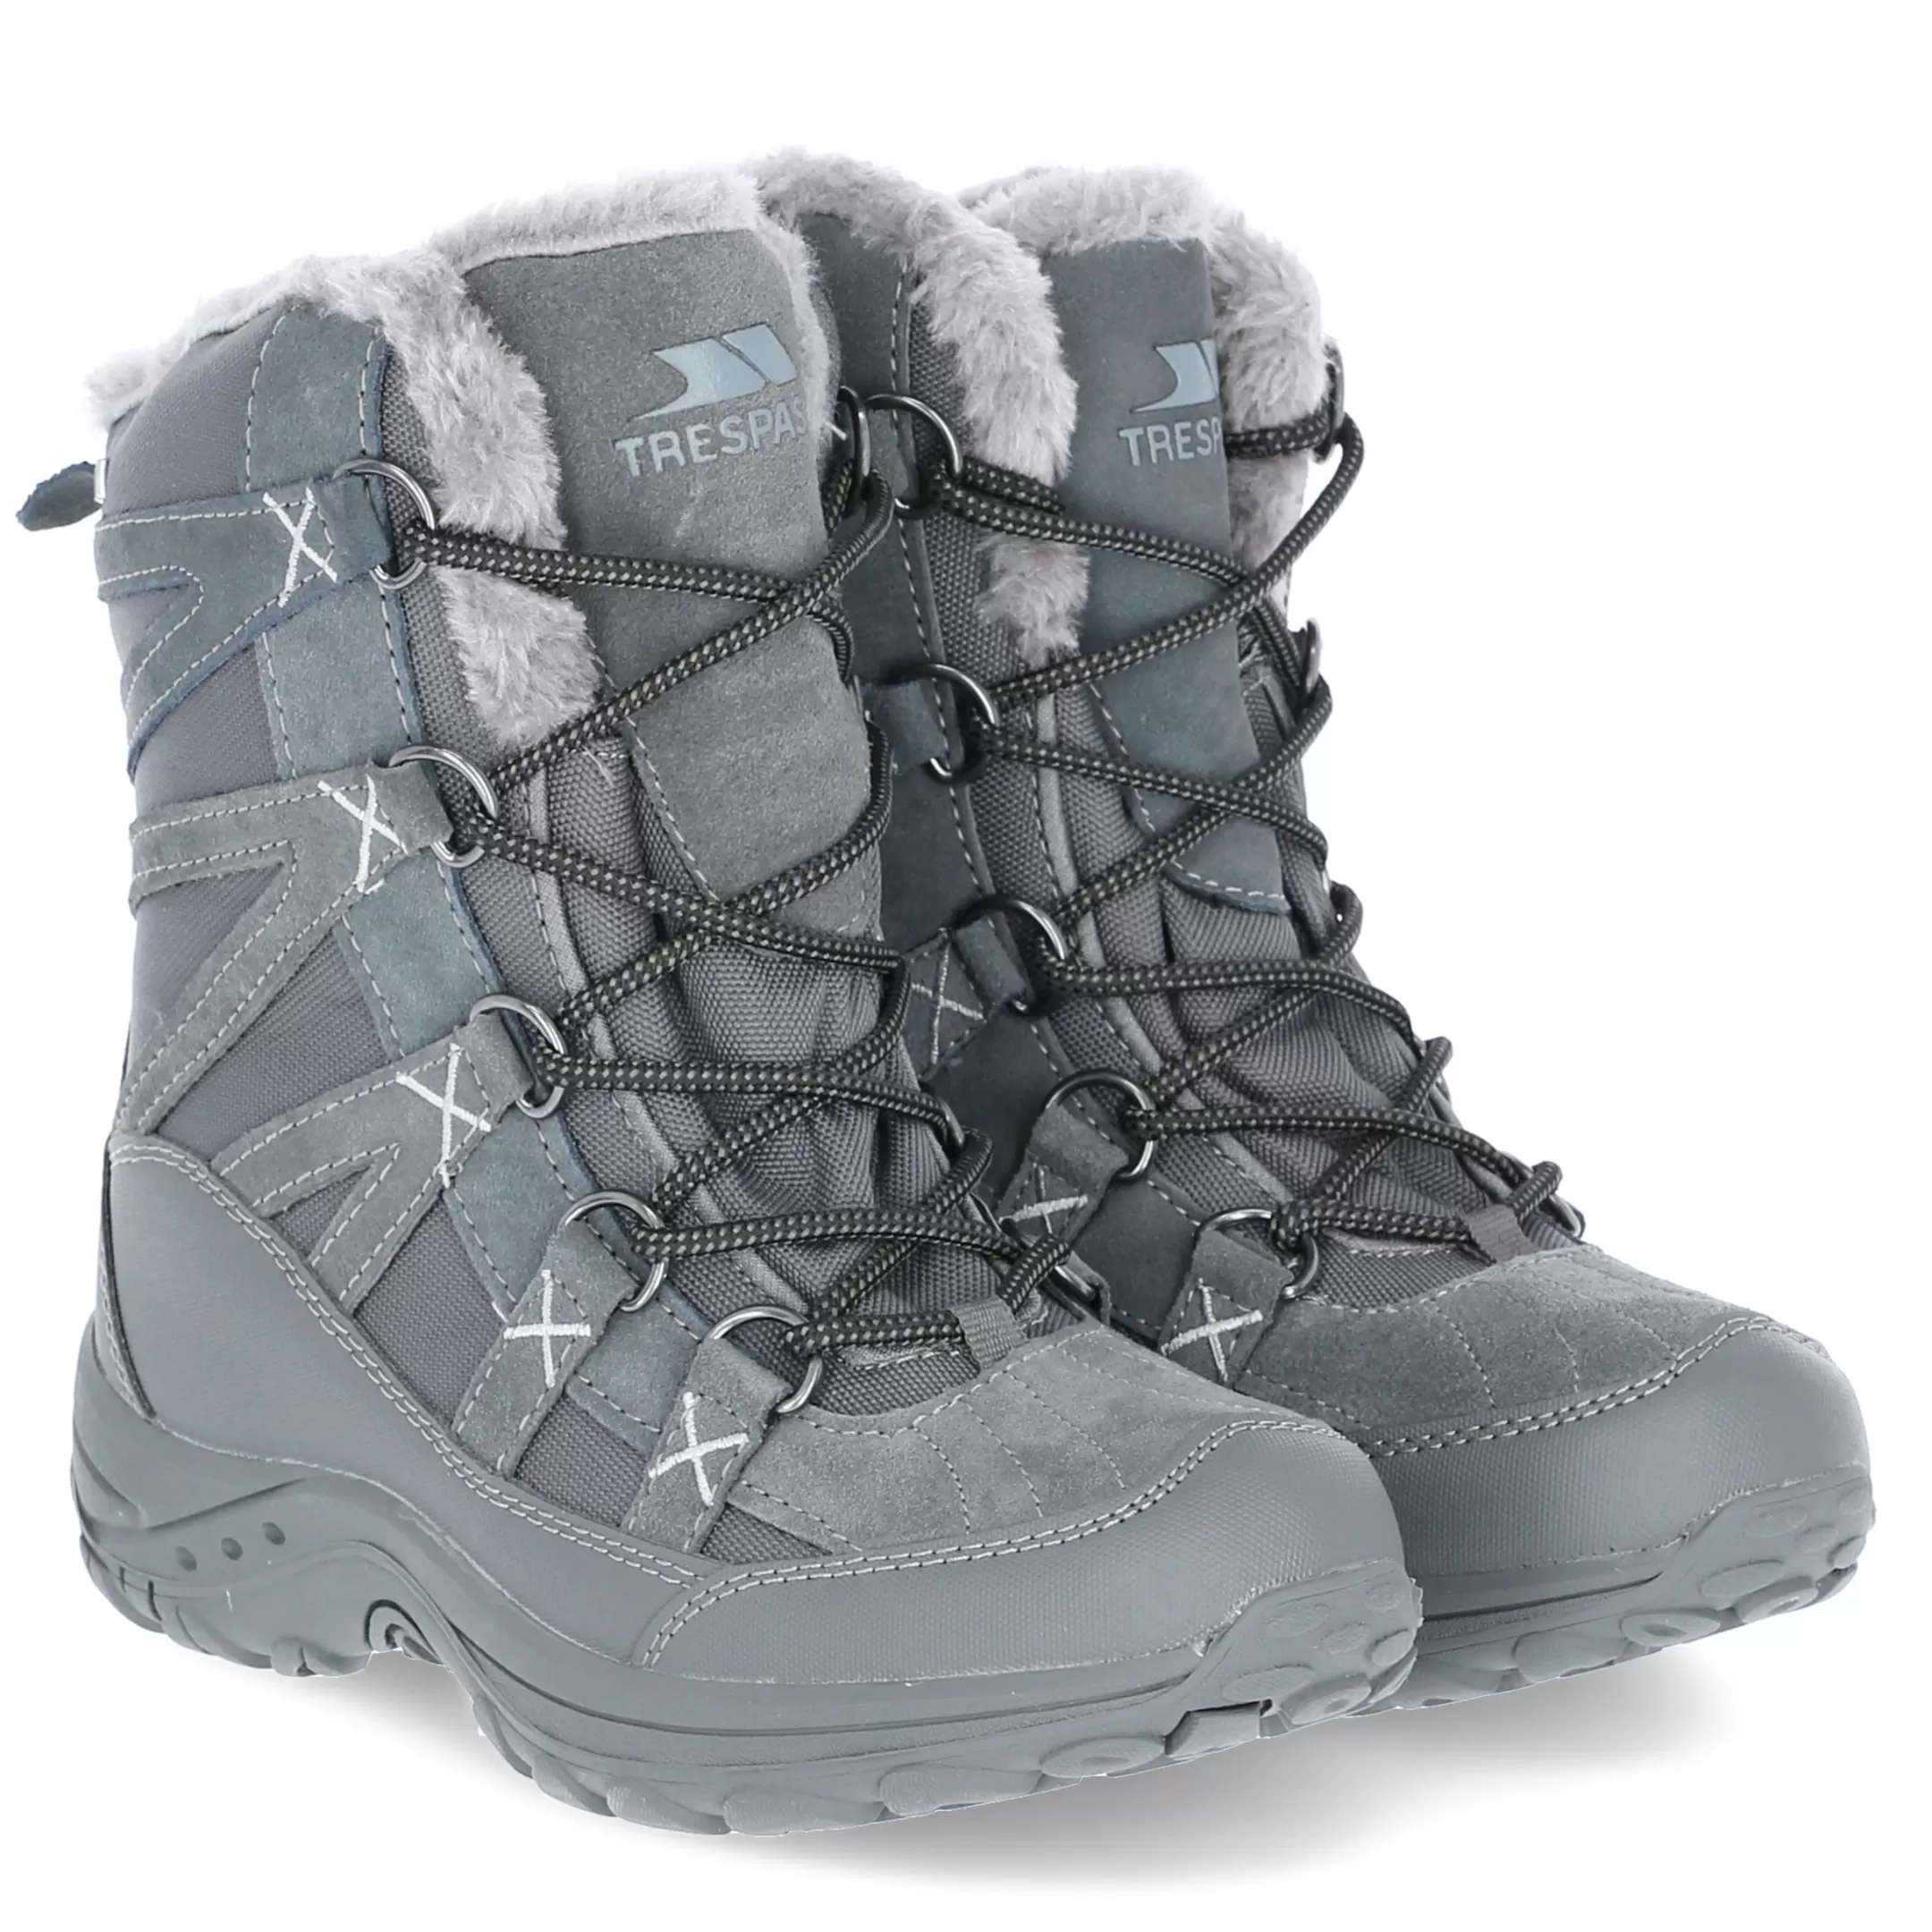 Womens Insulated Waterproof Snow Boots Zofia | Trespass Shop